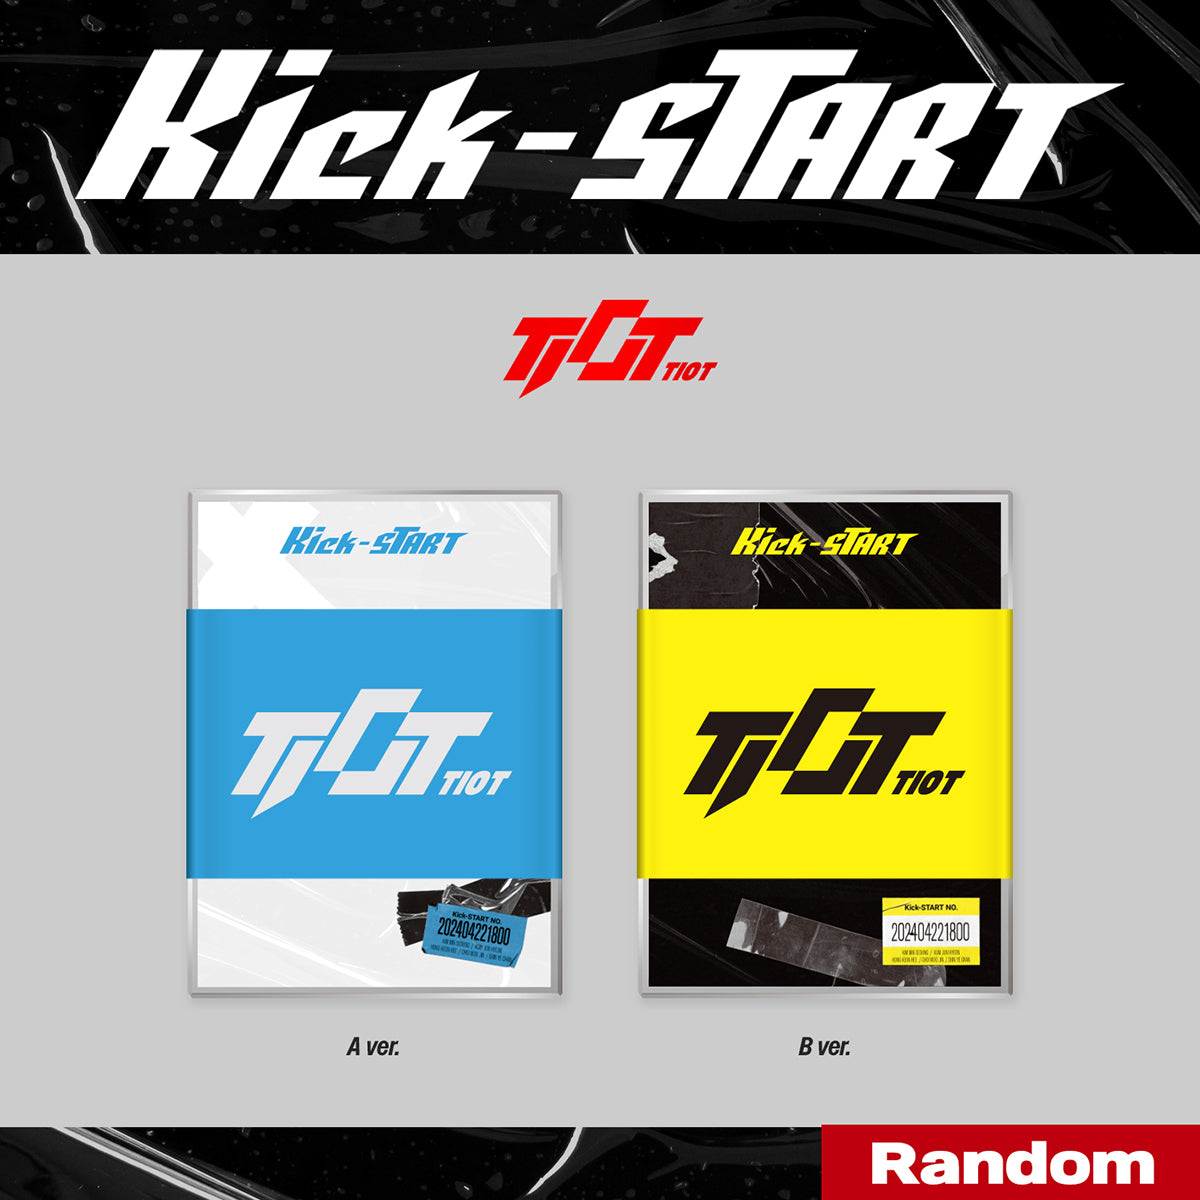 TIOT - Kick-START (PLVE Ver.) (Random)